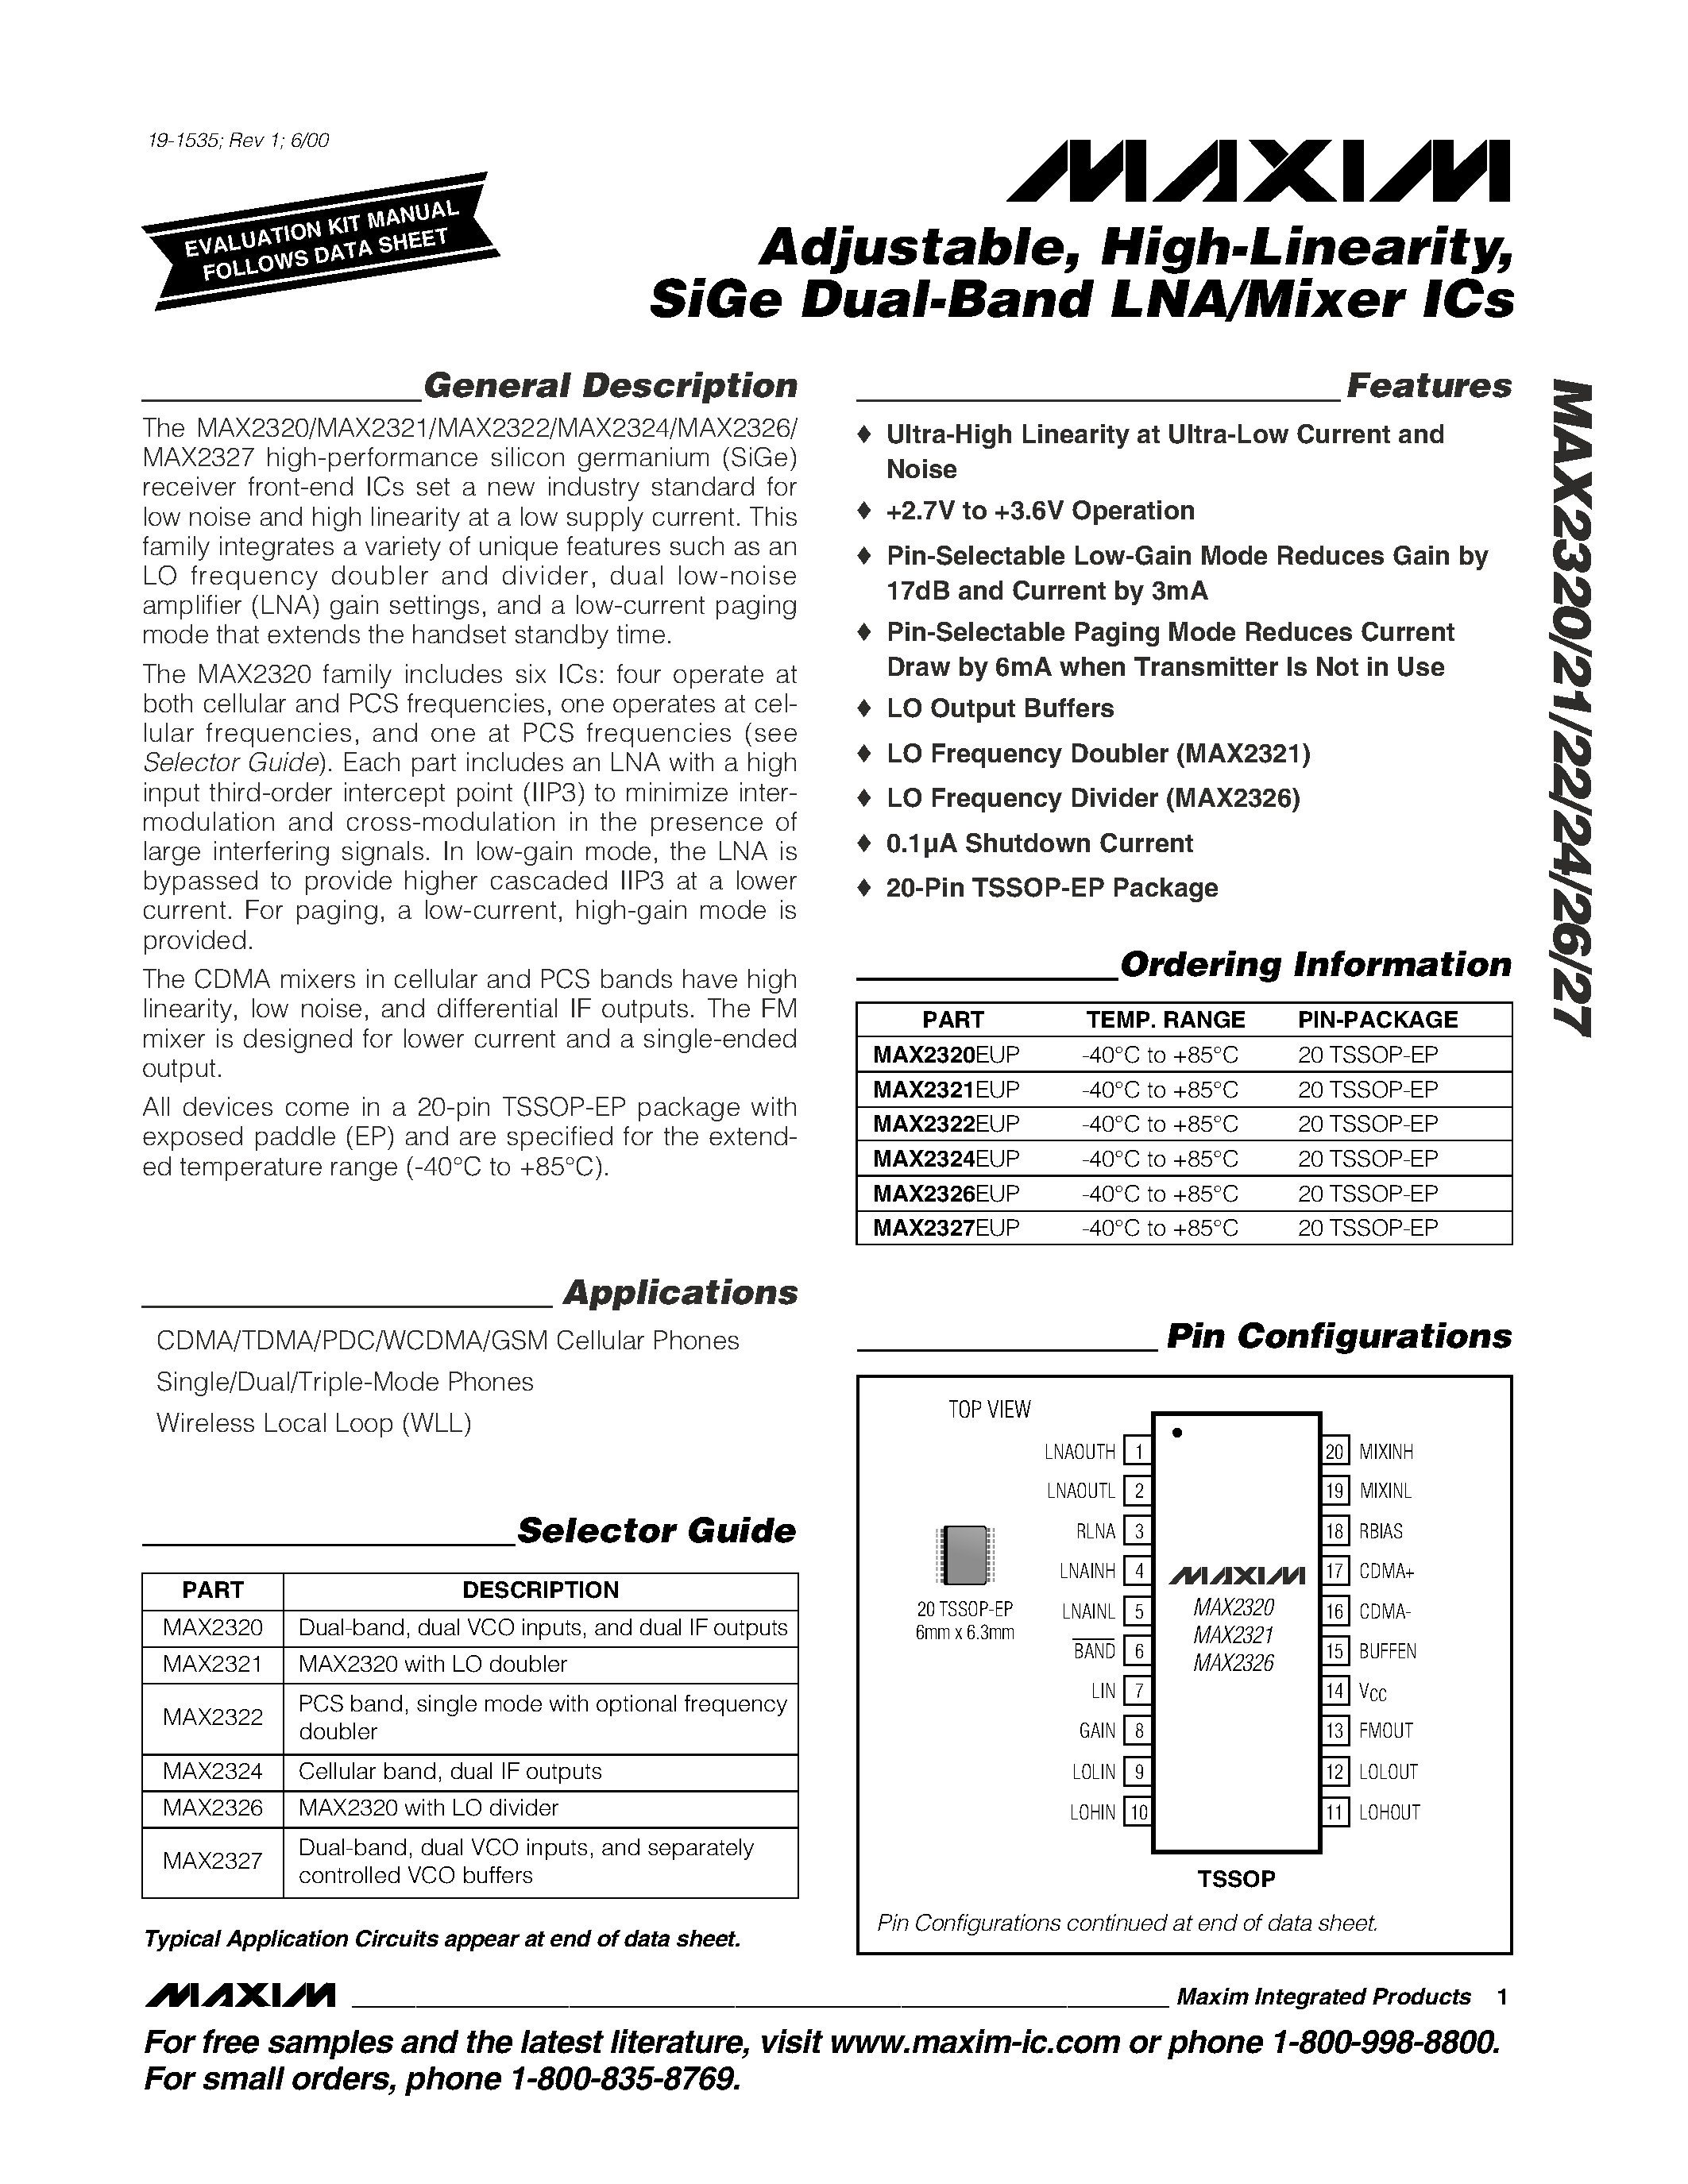 Datasheet MAX2326 - Adjustable / High-Linearity / SiGe Dual-Band LNA/Mixer ICs page 1